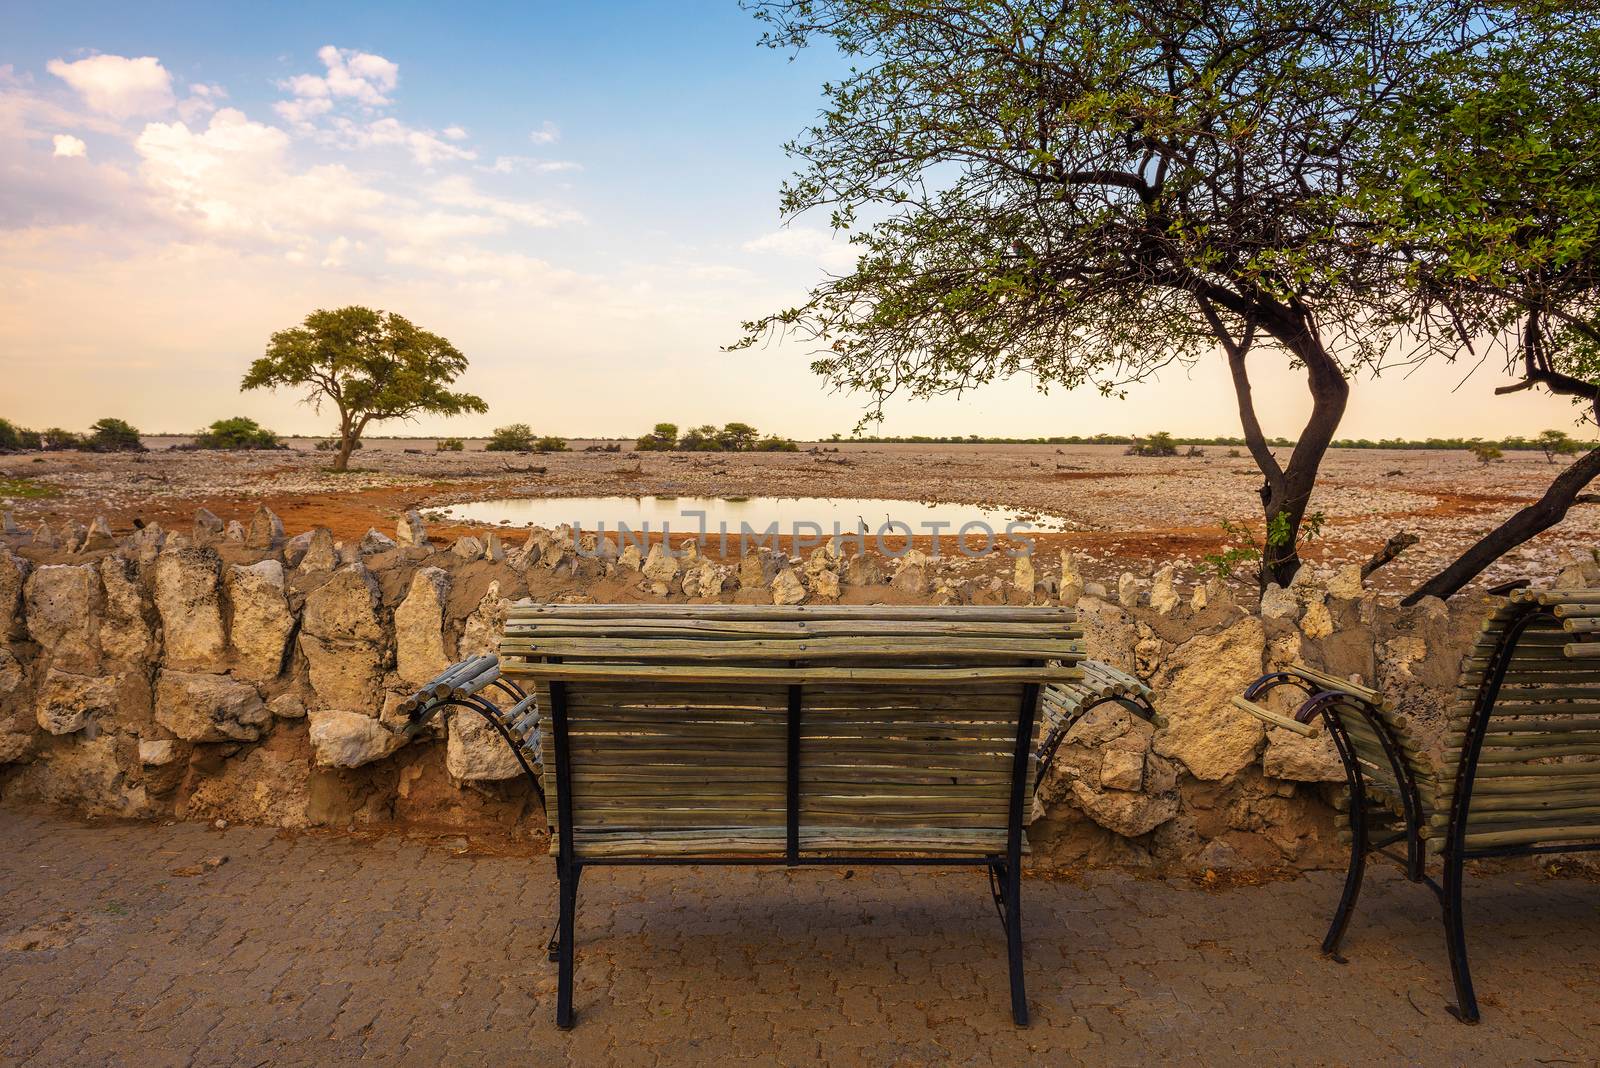 Bench at the waterhole of Okaukuejo Campsite in Etosha National Park, Namibia by nickfox